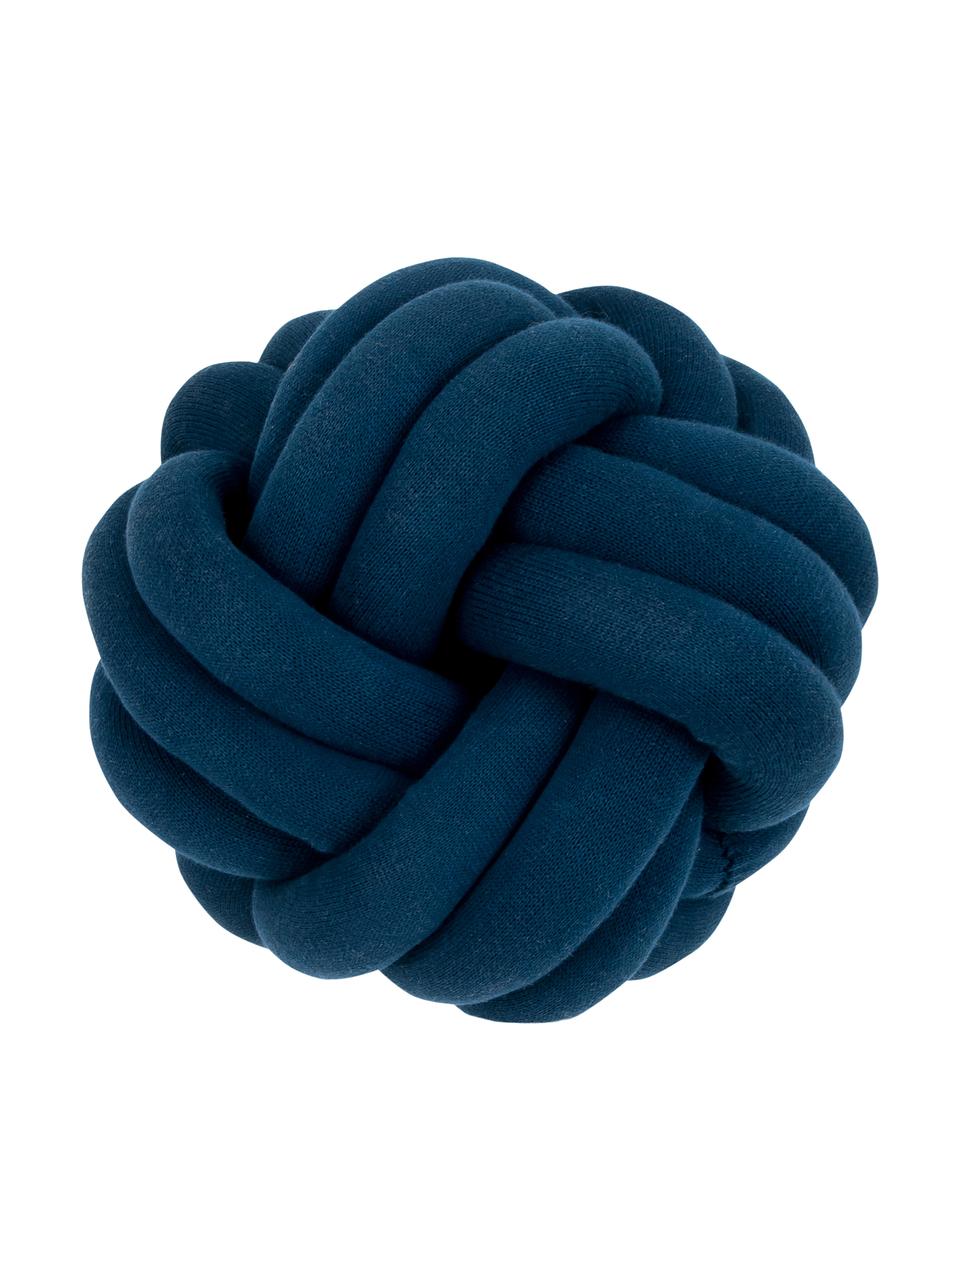 Cojín nudo Twist, Azul oscuro, Ø 30 cm